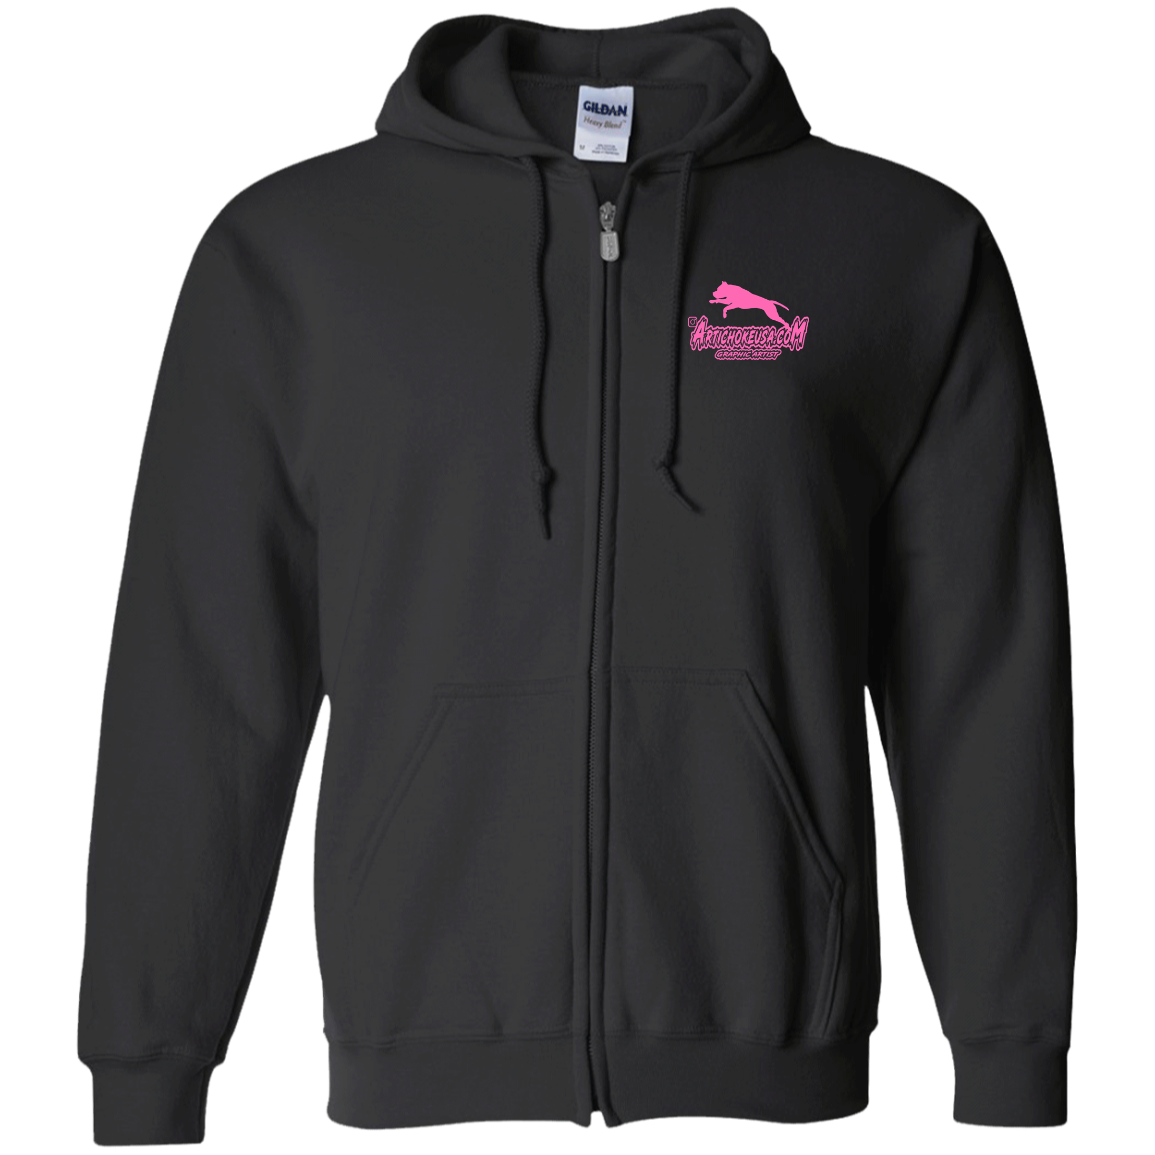 ArtichokeUSA Custom Design. Ruffing the Passer. Pitbull Edition. Female Version. Zip Up Hooded Sweatshirt